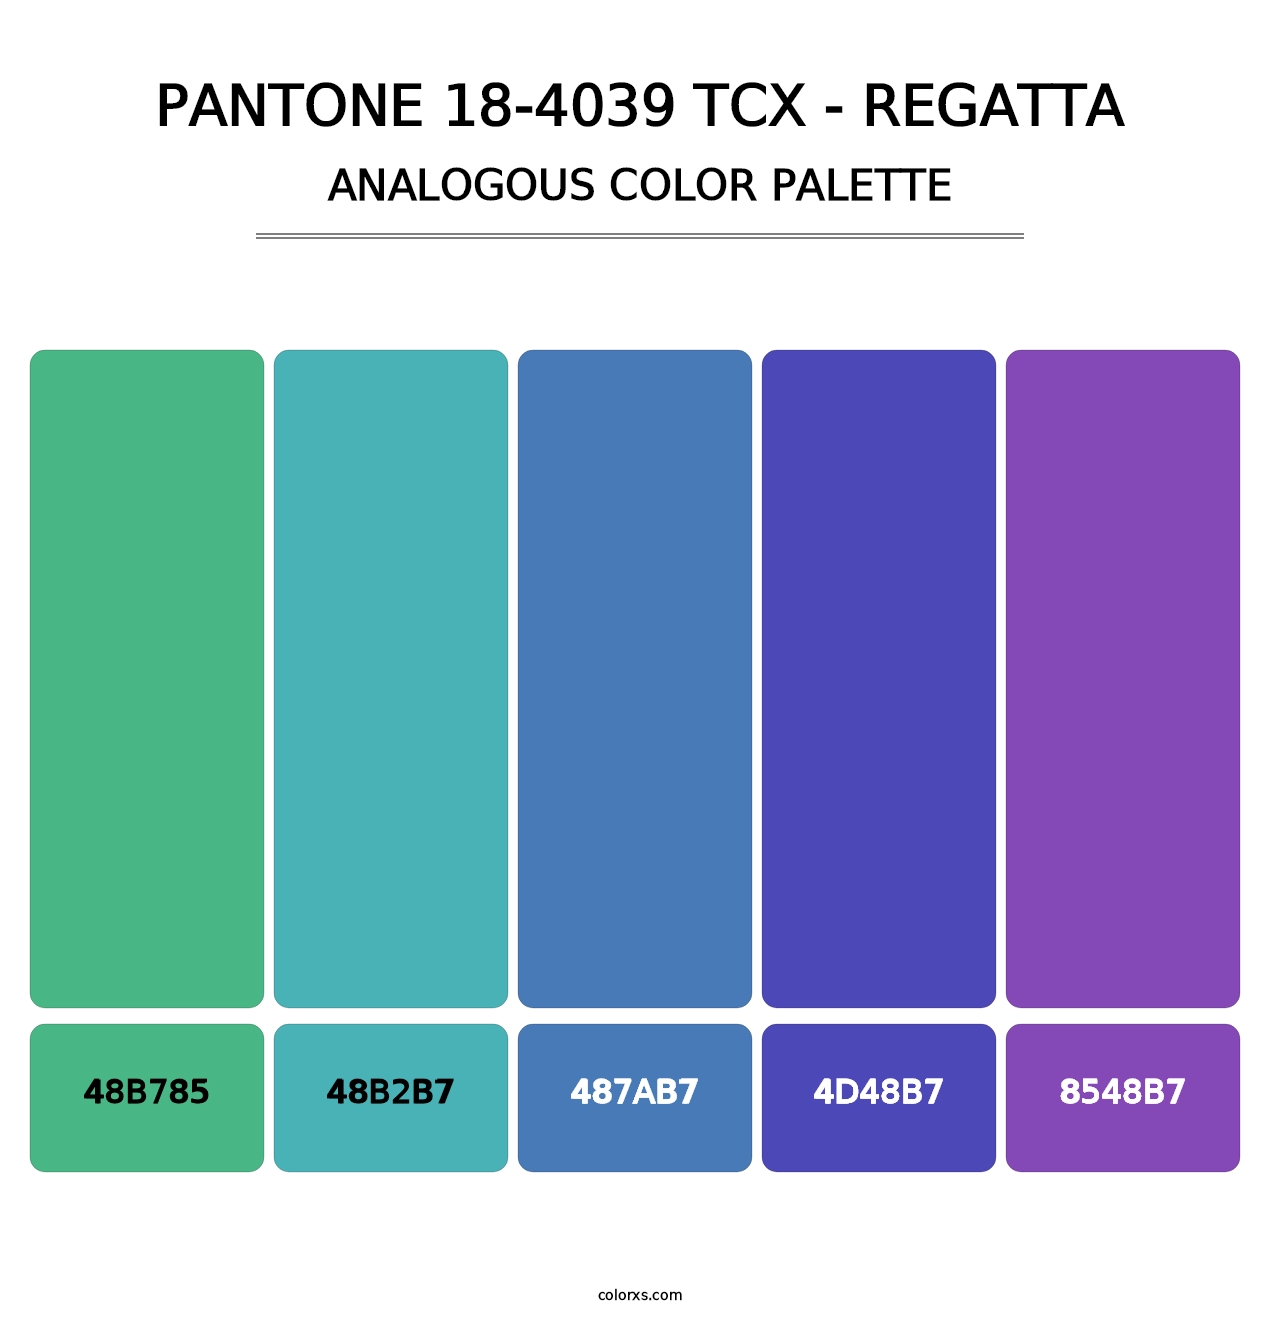 PANTONE 18-4039 TCX - Regatta - Analogous Color Palette